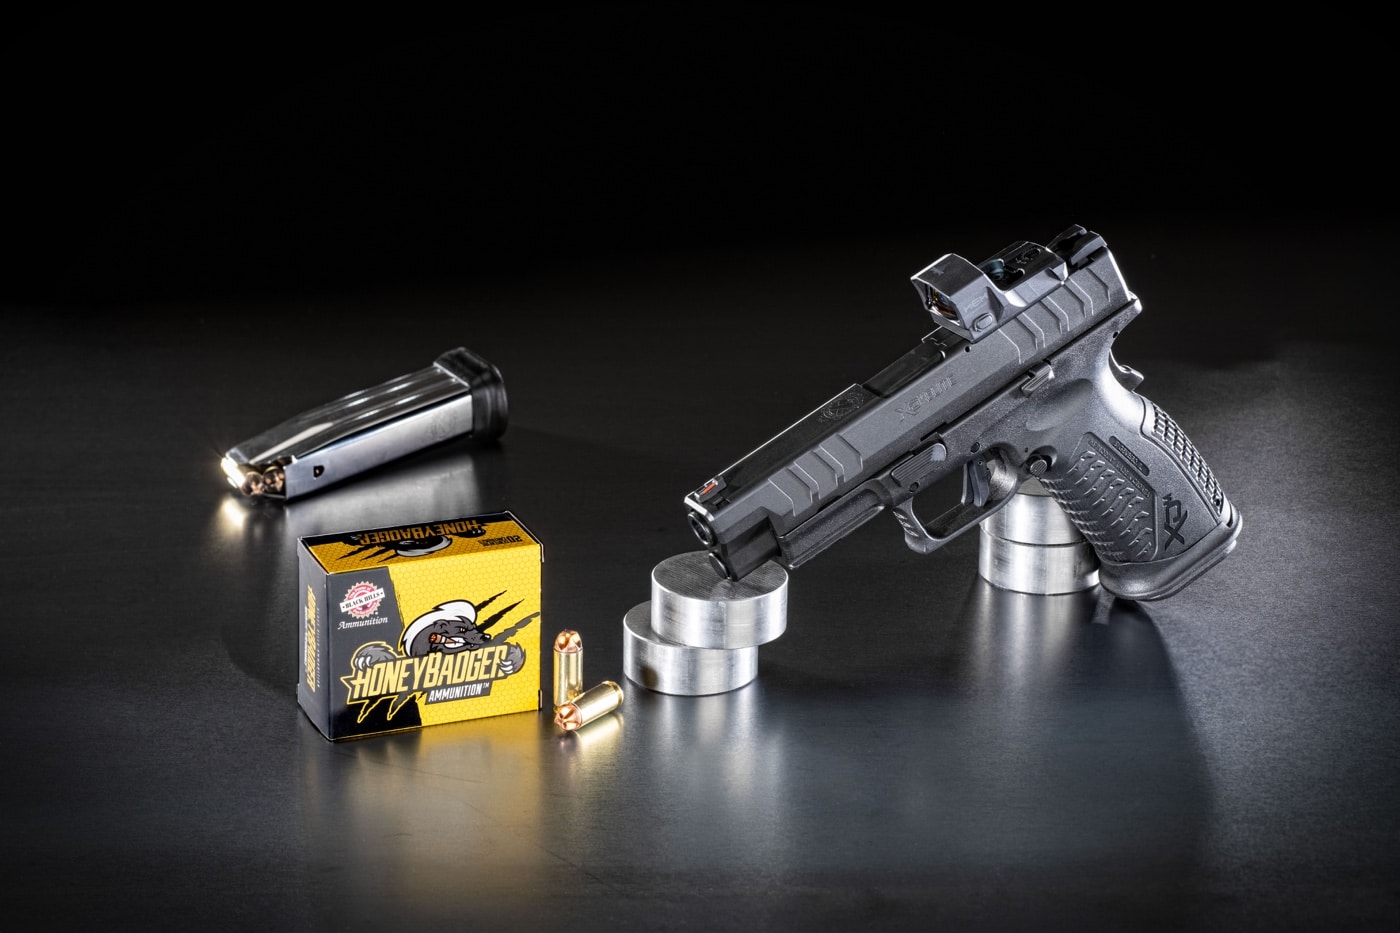 black hills honey badger 10mm ammunition ammo review fluted bullet self defense personal protection springfield xd-m pistol handgun